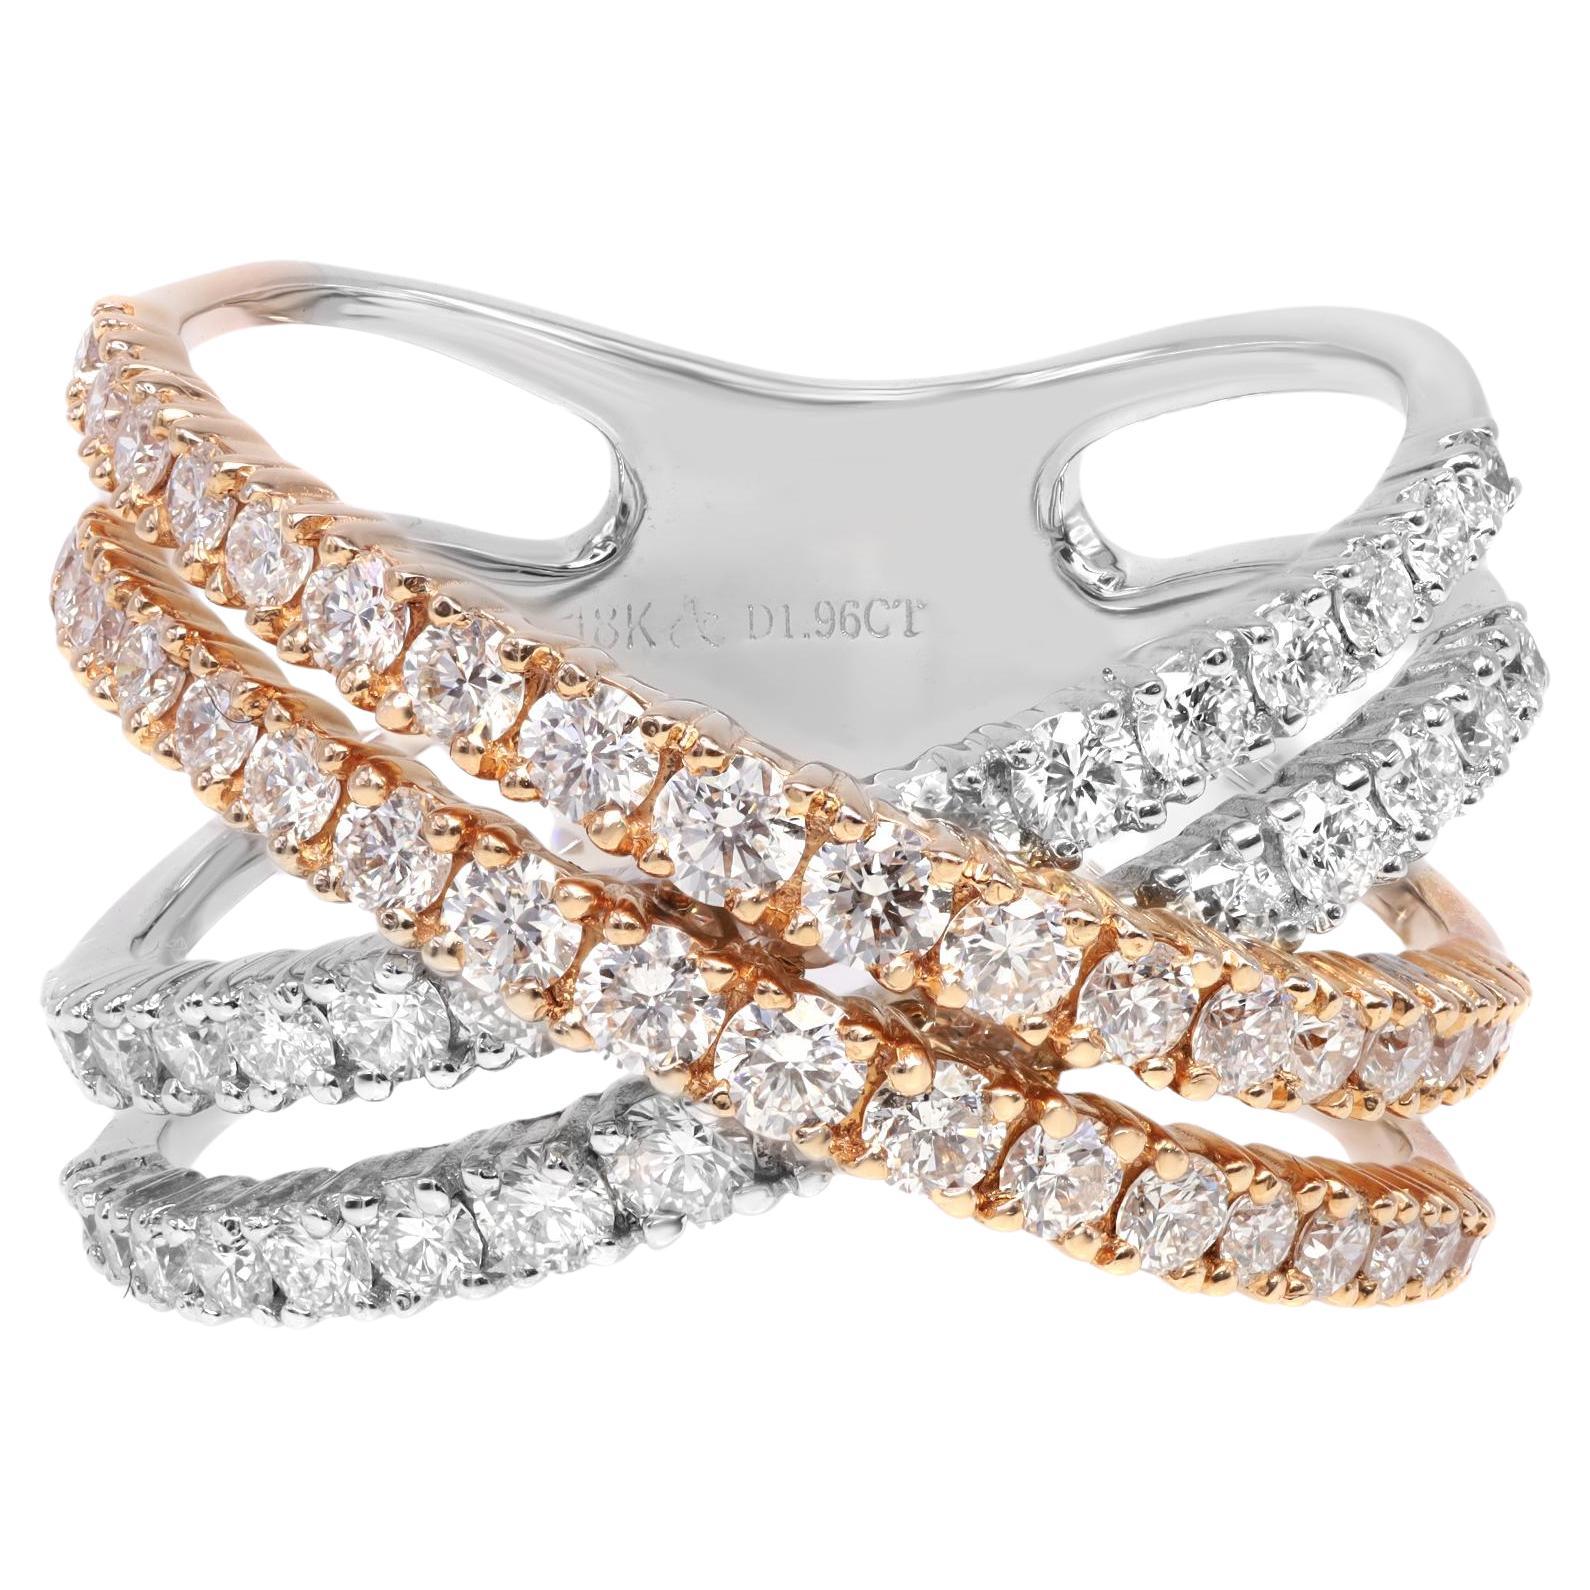 Natural Diamond Two Tone Crisscross Ring 18K White & Rose Gold 1.96Cttw For Sale